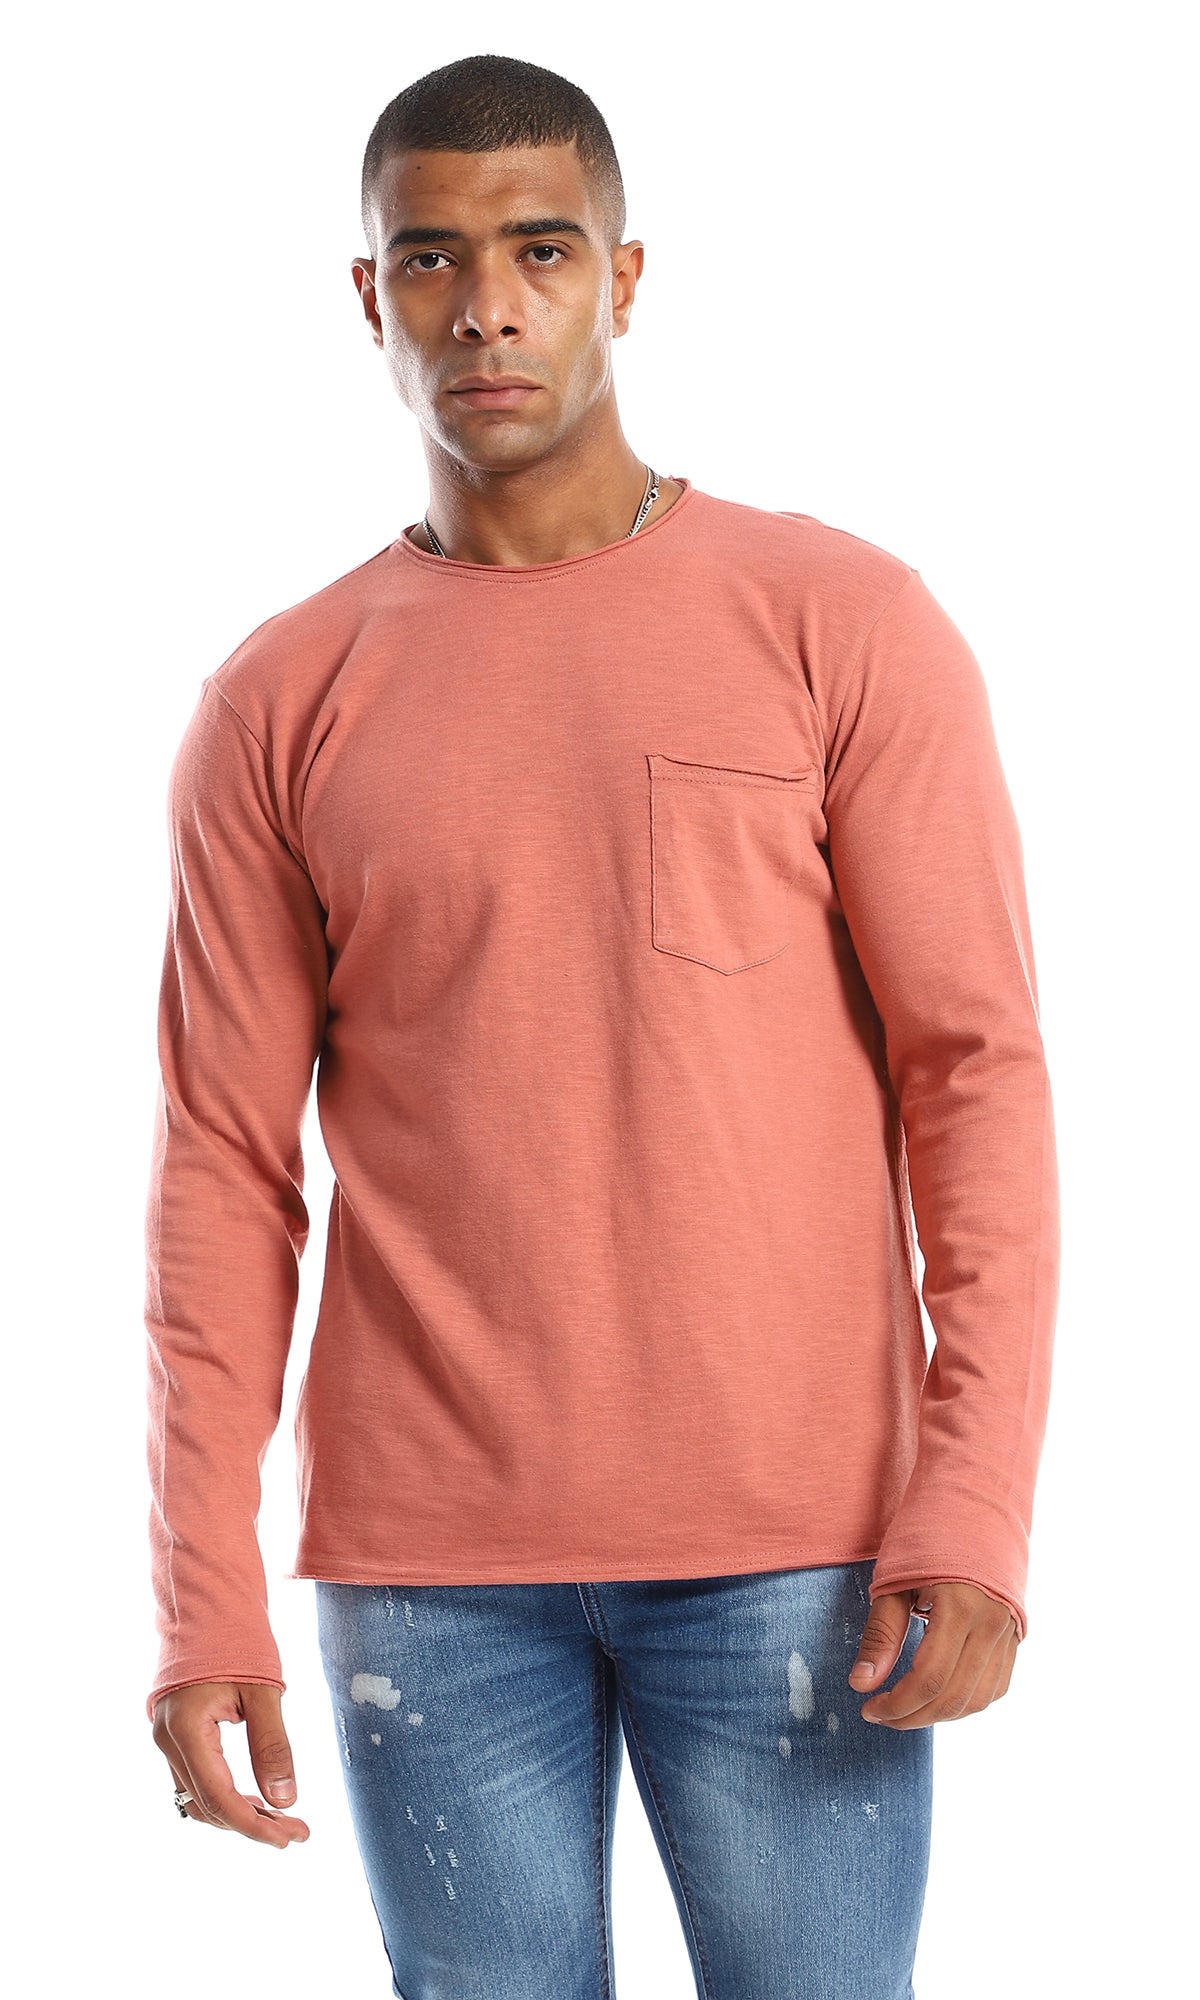 97731 Long Sleeves Round Neck Cotton T-Shirt - Dark Salmon